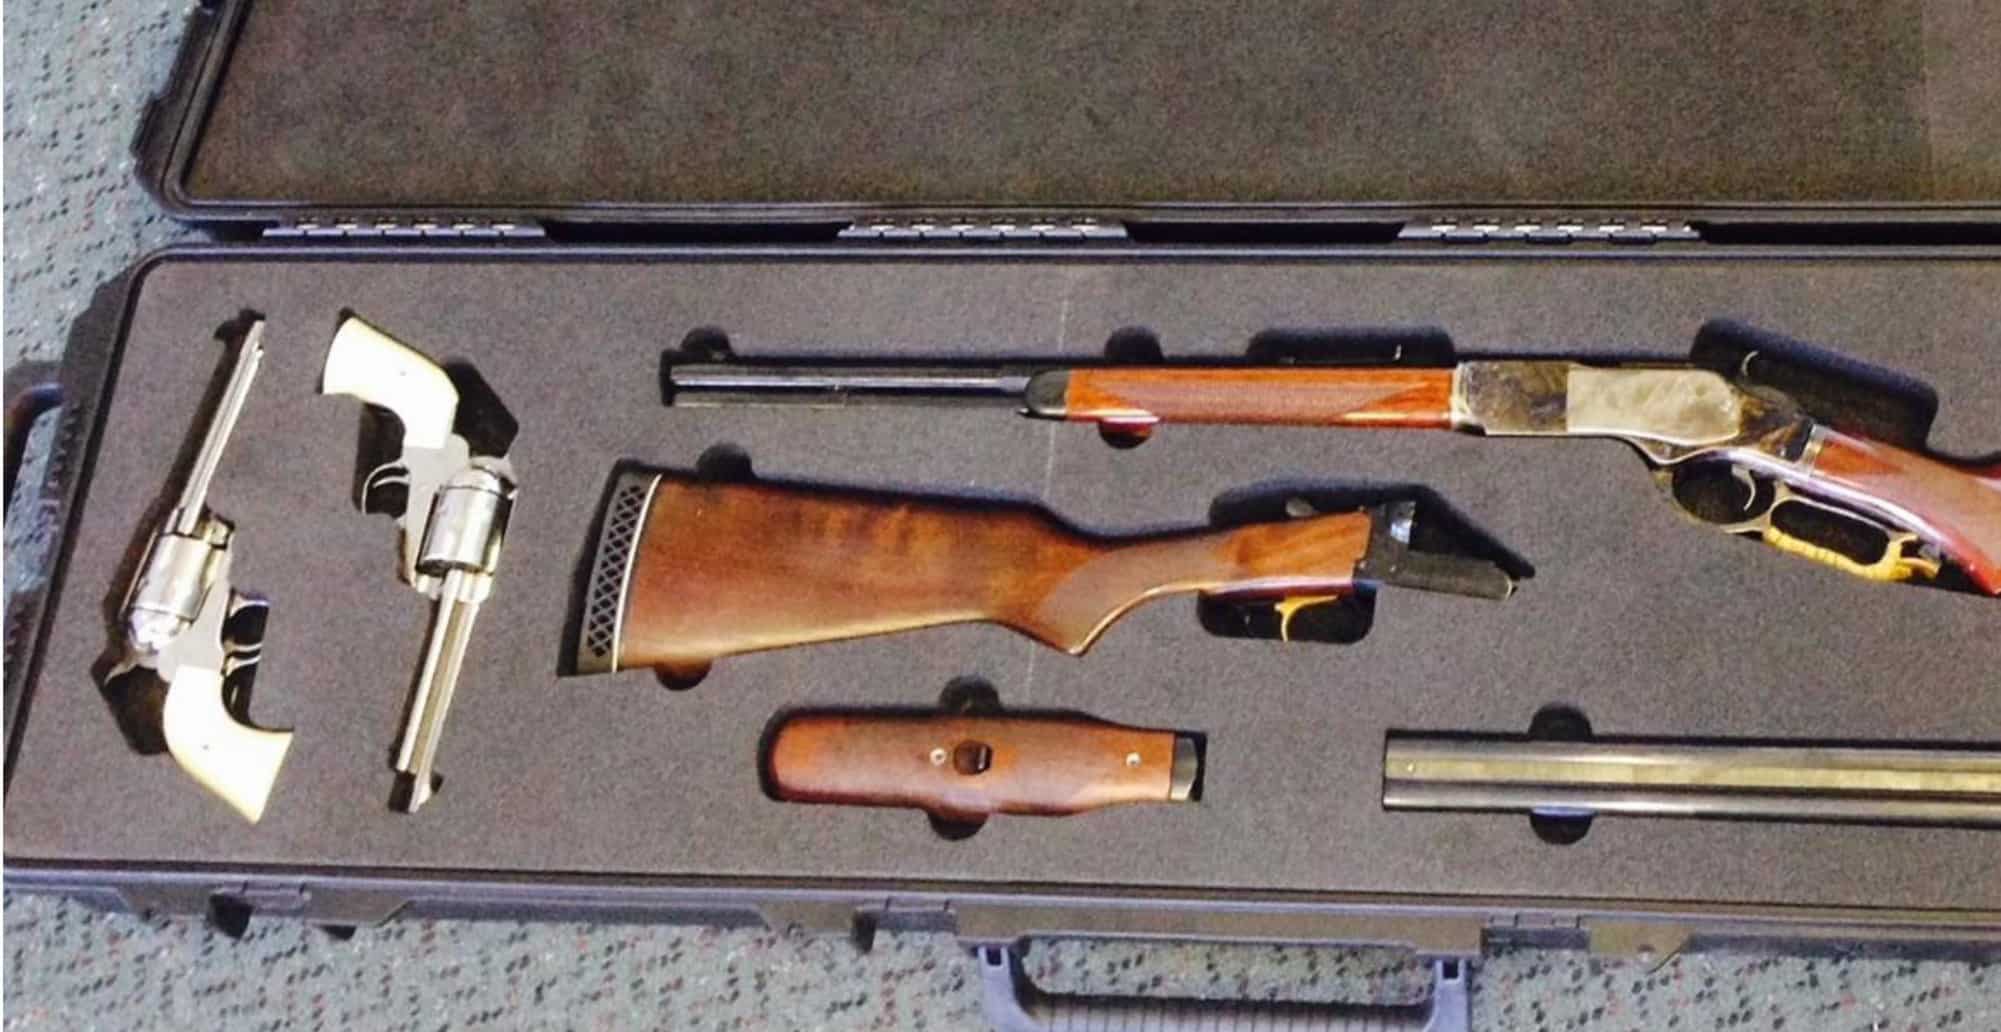 image alloy cases gun case